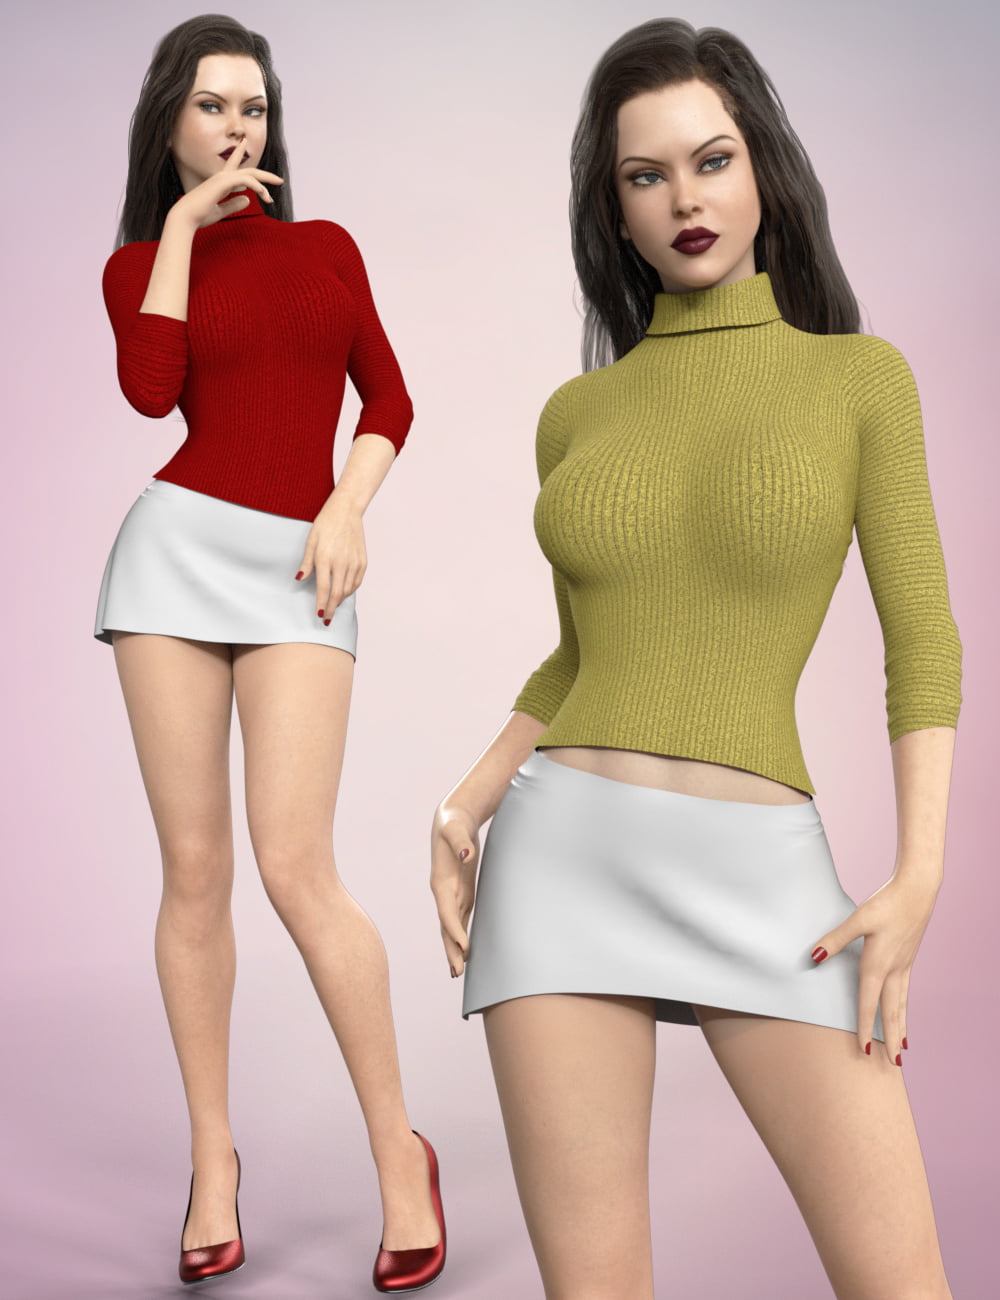 Hot Sweater for Genesis 8 Females for dForce